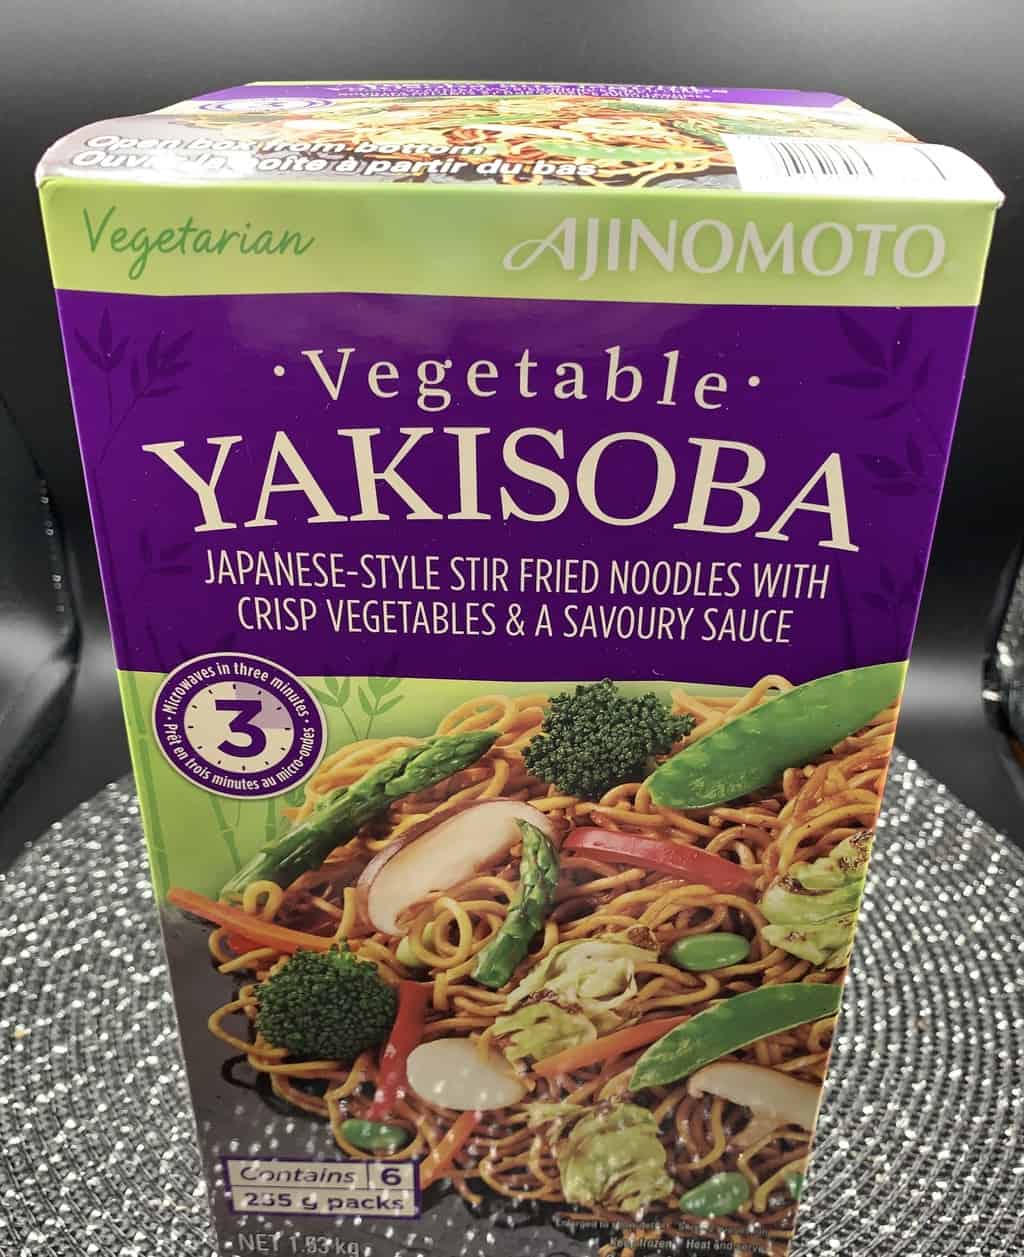 Costco Ajinomoto Vegetable Yakisoba Review Costcuisine